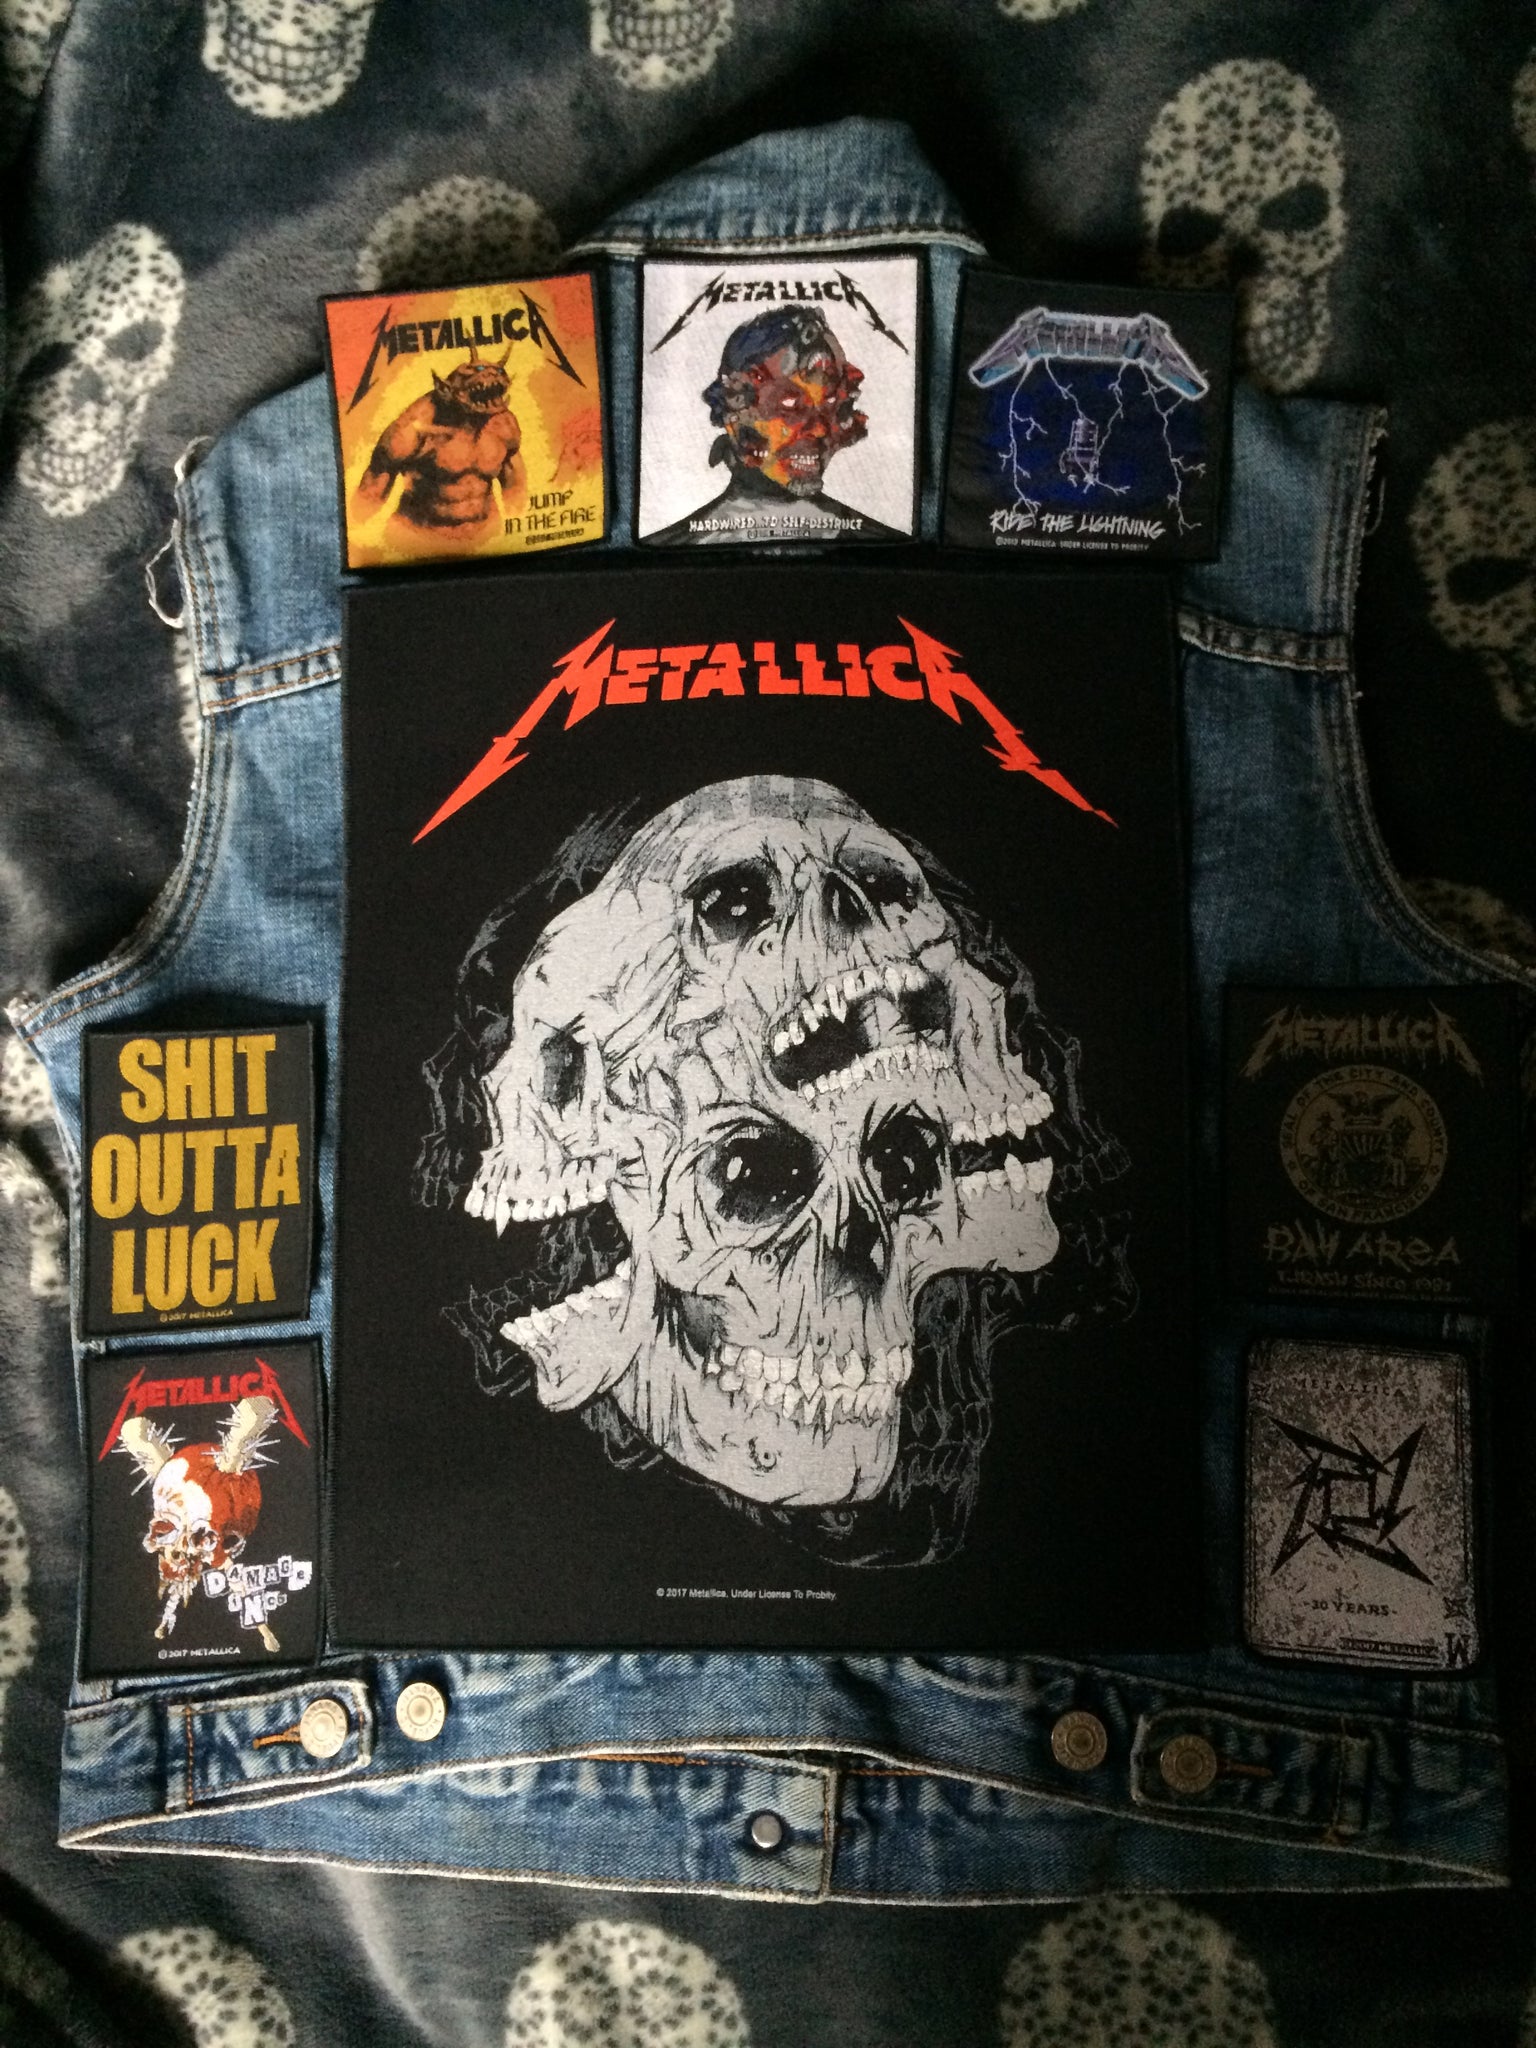 Metallica Fully Loaded Patch Vest Denim Cut-Off Thrash Metal